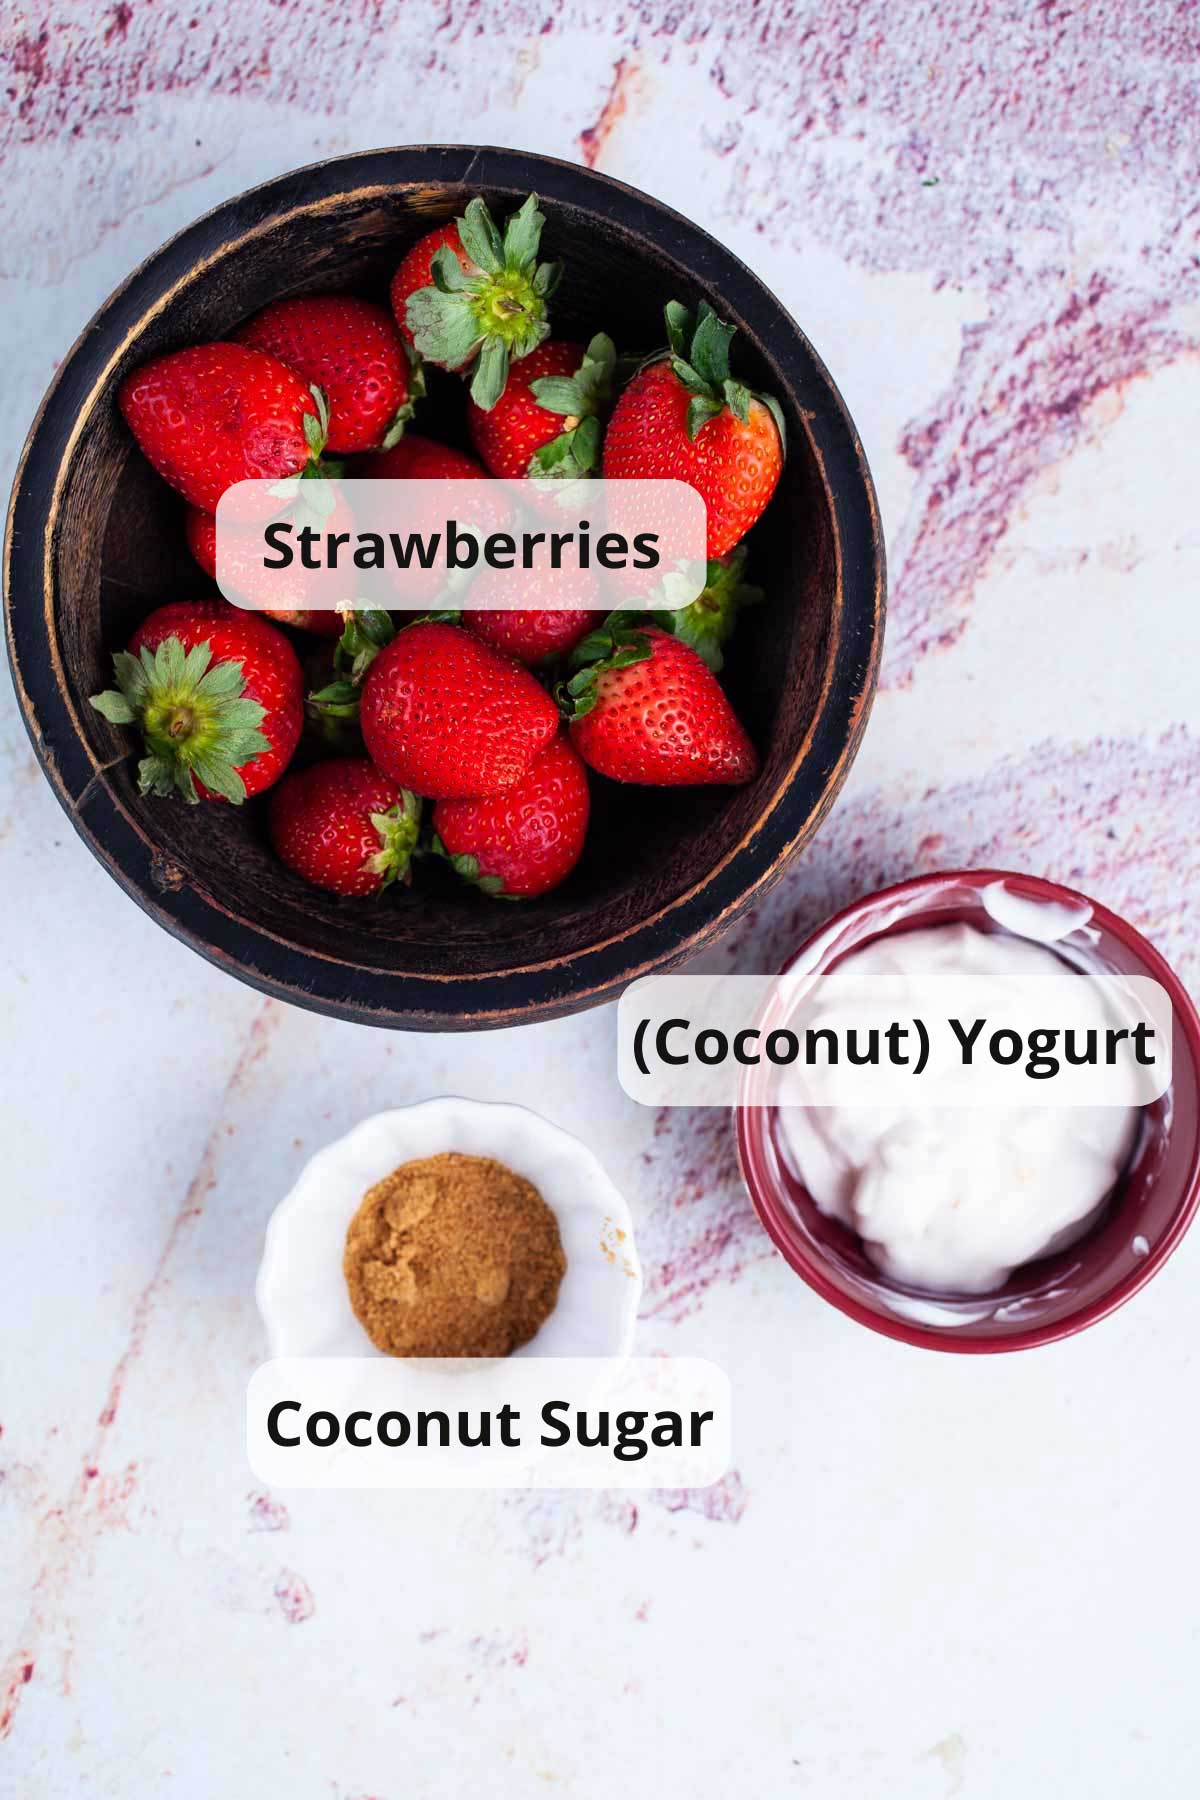 Fresh strawberries, coconut yogurt, and coconut sugar displayed on a table.